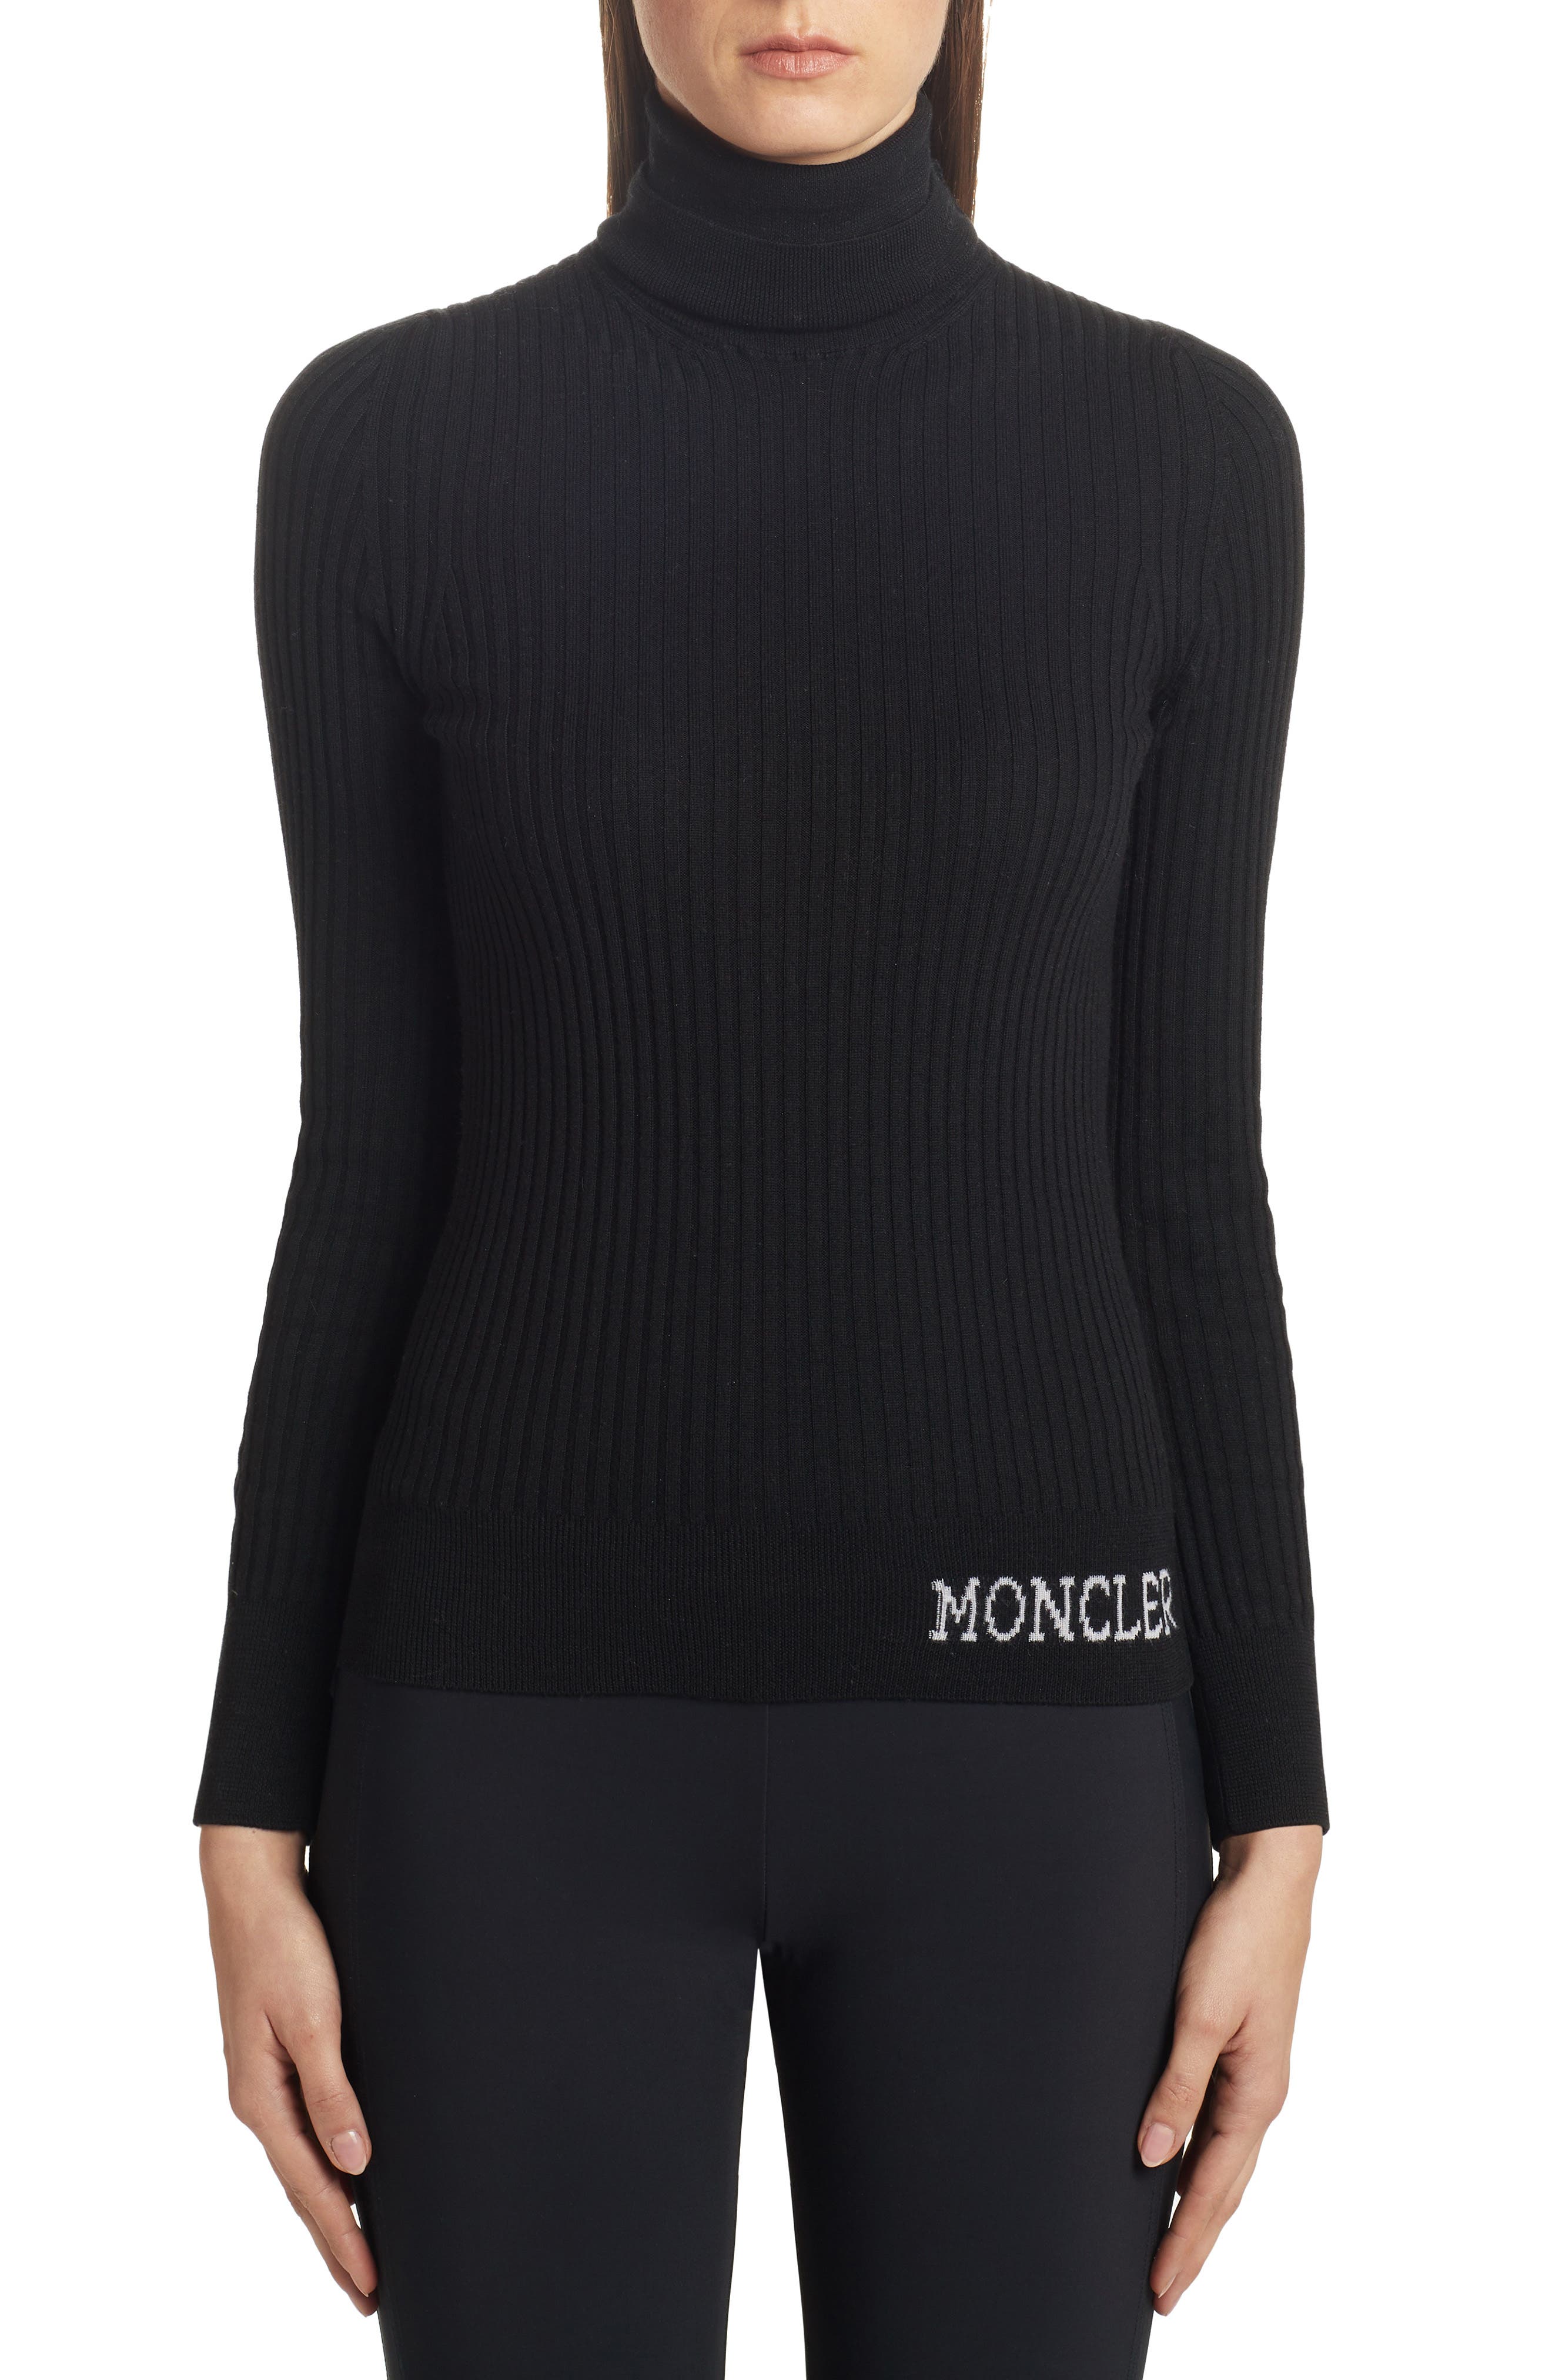 moncler sweater women